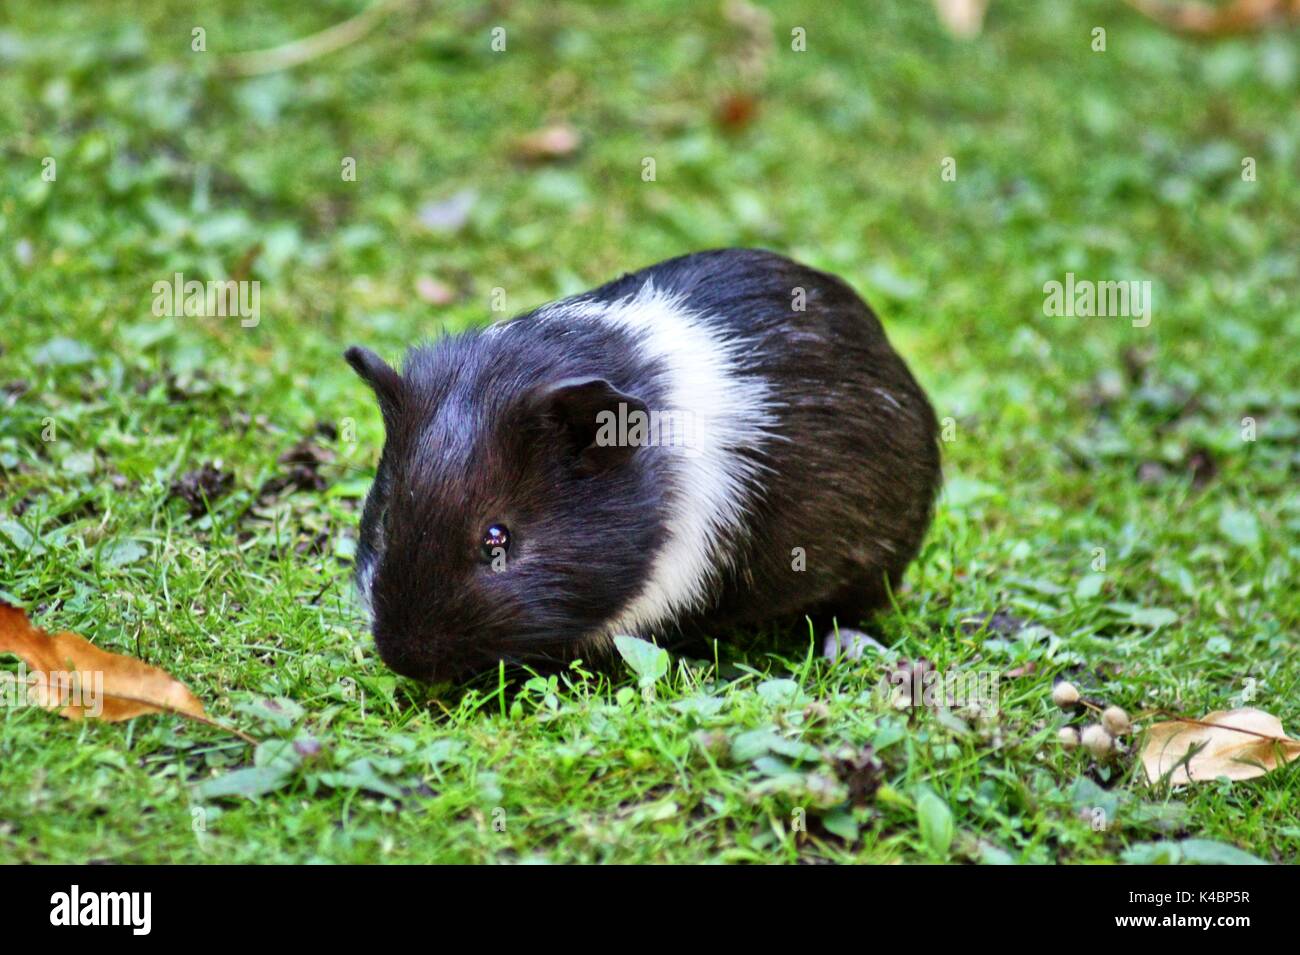 black and white guinea pig